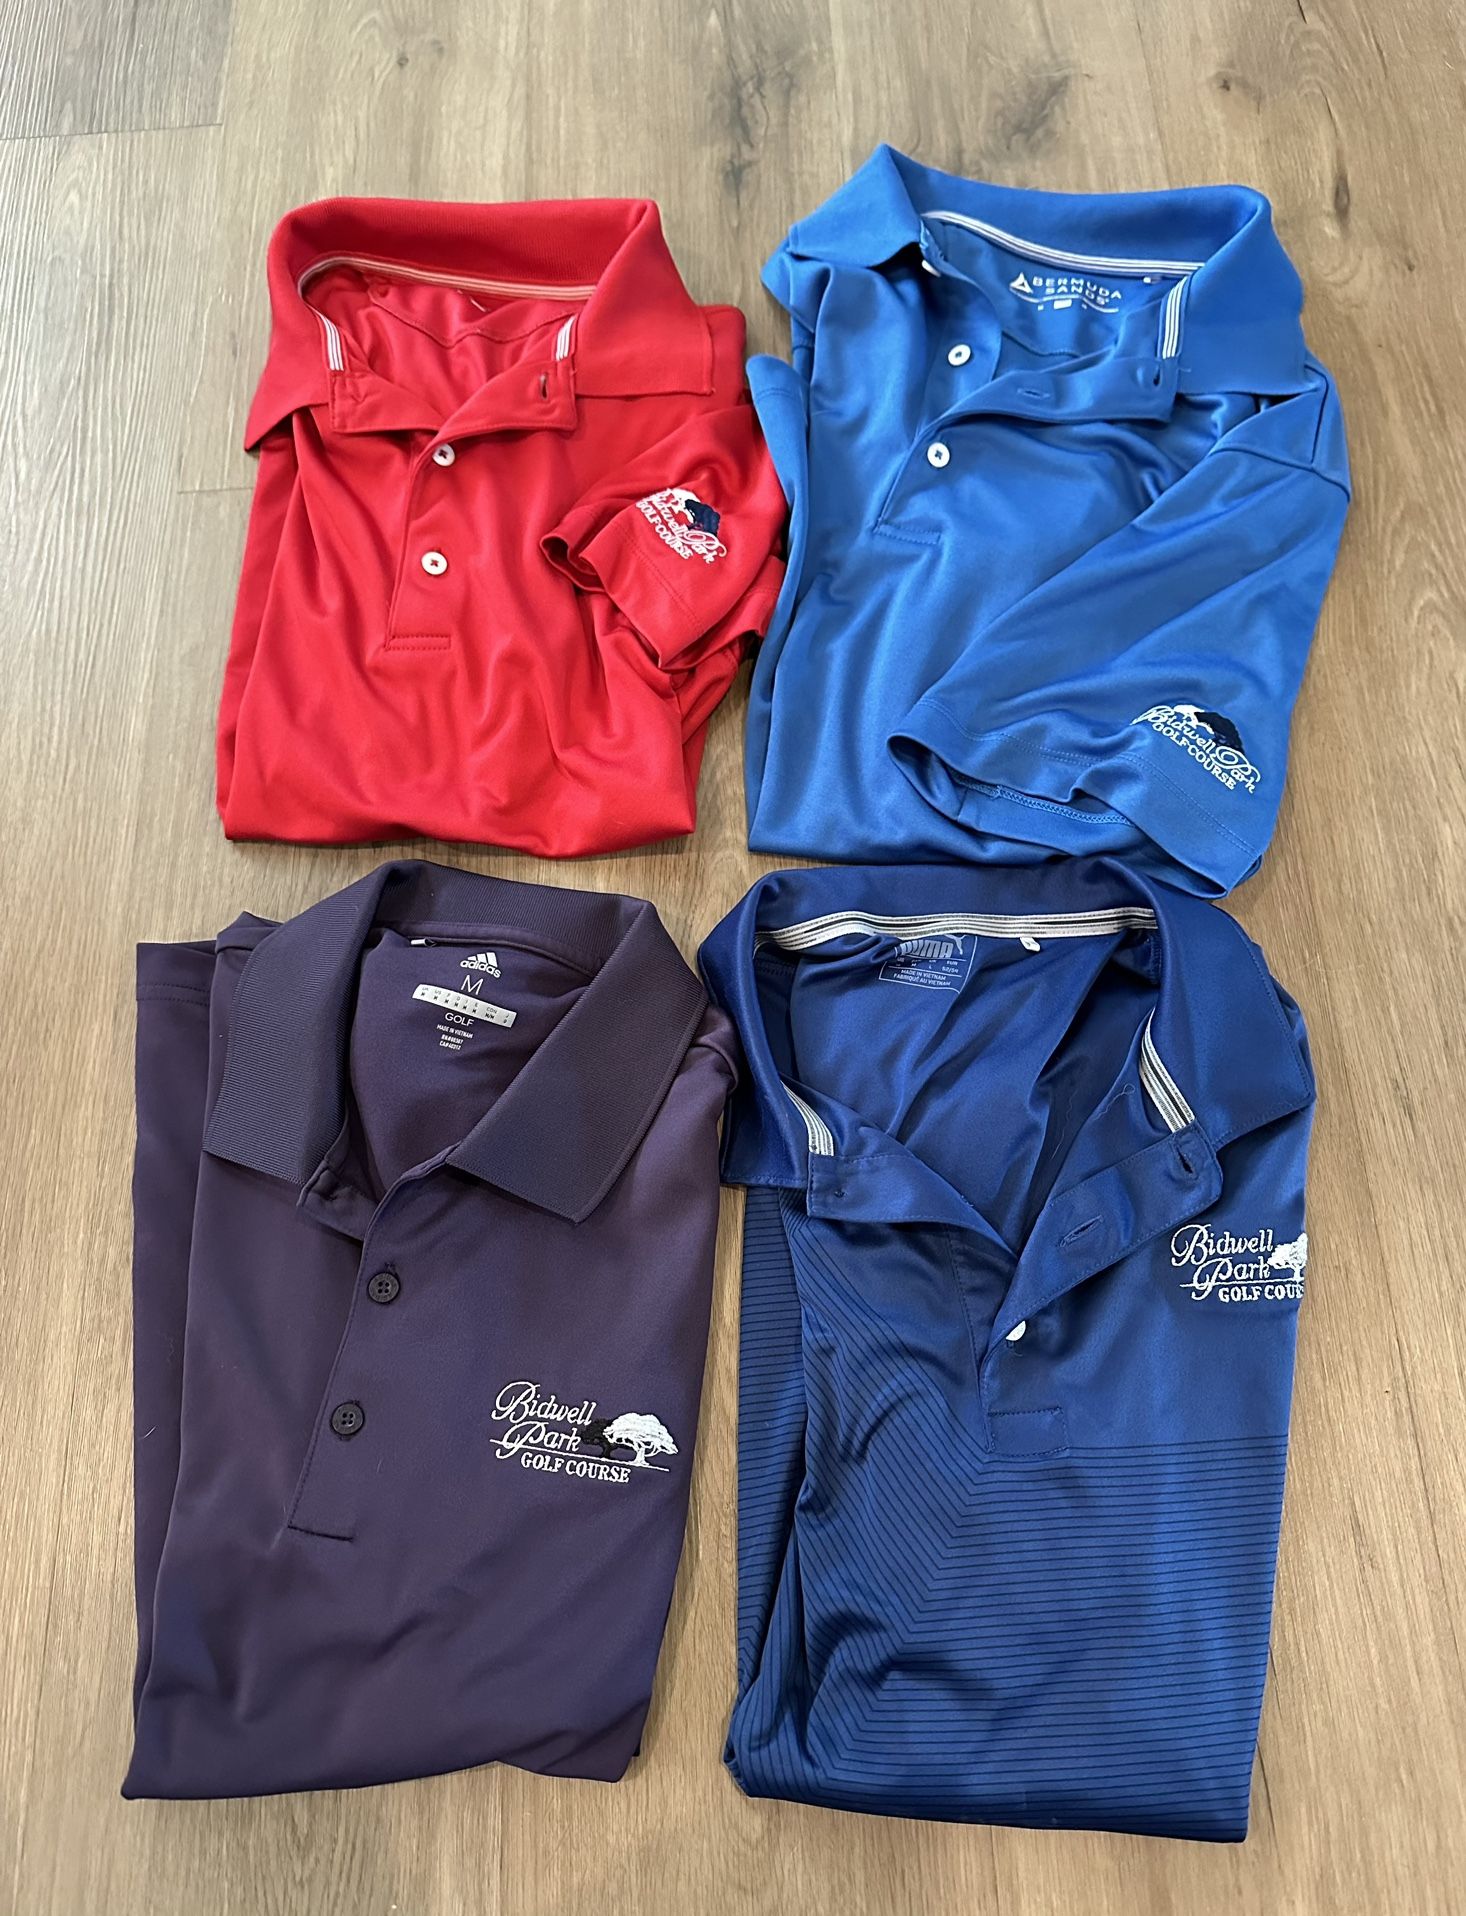 4 Men’s  Polo Sri Fit Golf Shorts w/ Bidwell Golf Course Emblem, Sz. Medium